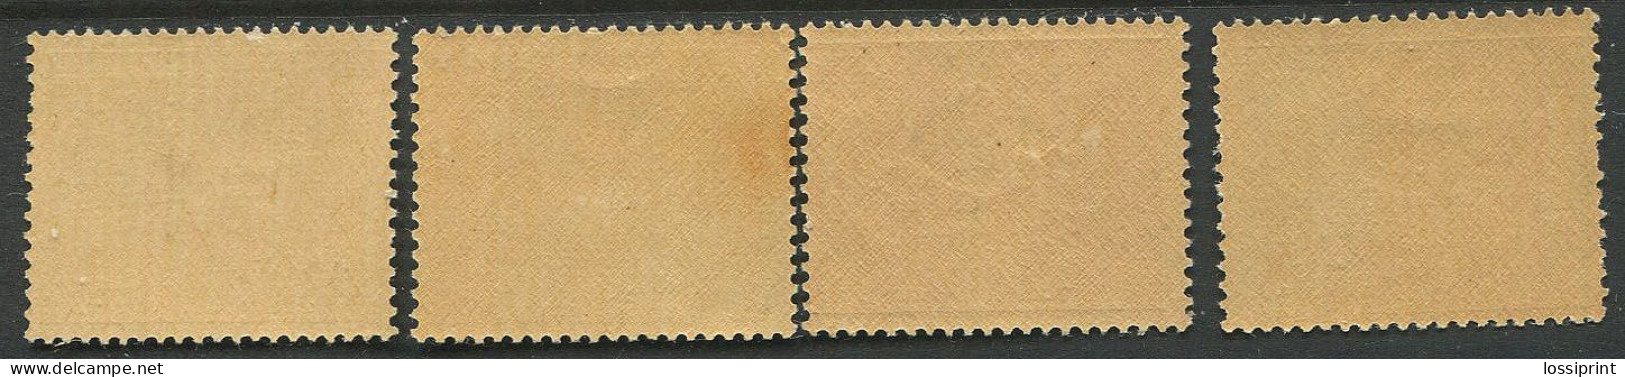 Estonia:Unused Stamps Serie Pigeons/airplanes, 1940, MNH - Estland